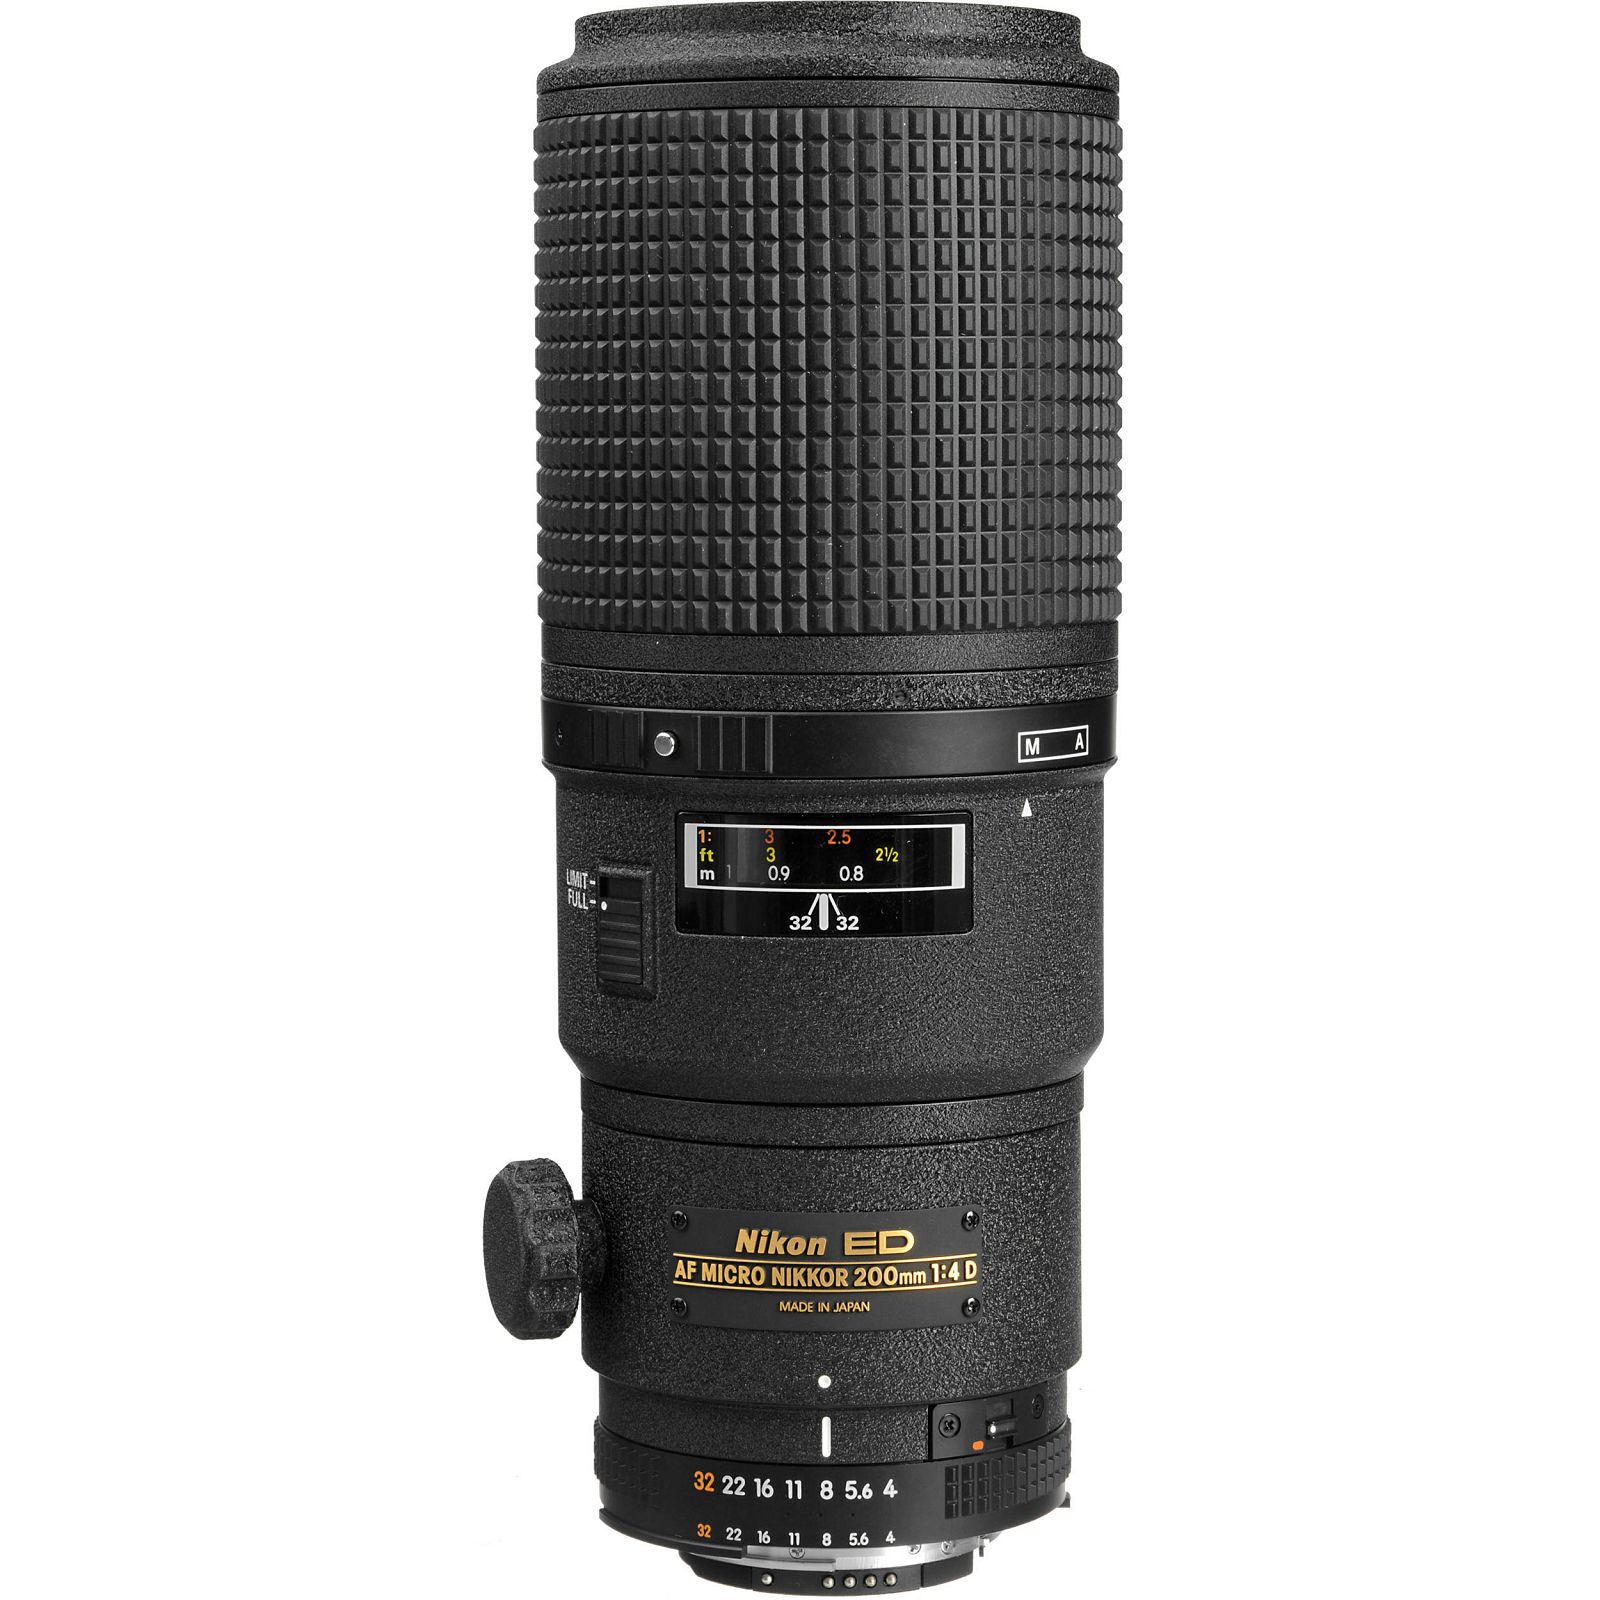 Nikon AF 200mm f/4 D IF-ED Micro FX Macro objektiv fiksne žarišne duljine Nikkor auto focus prime lens 200 F4D F/4D (JAA624DA)